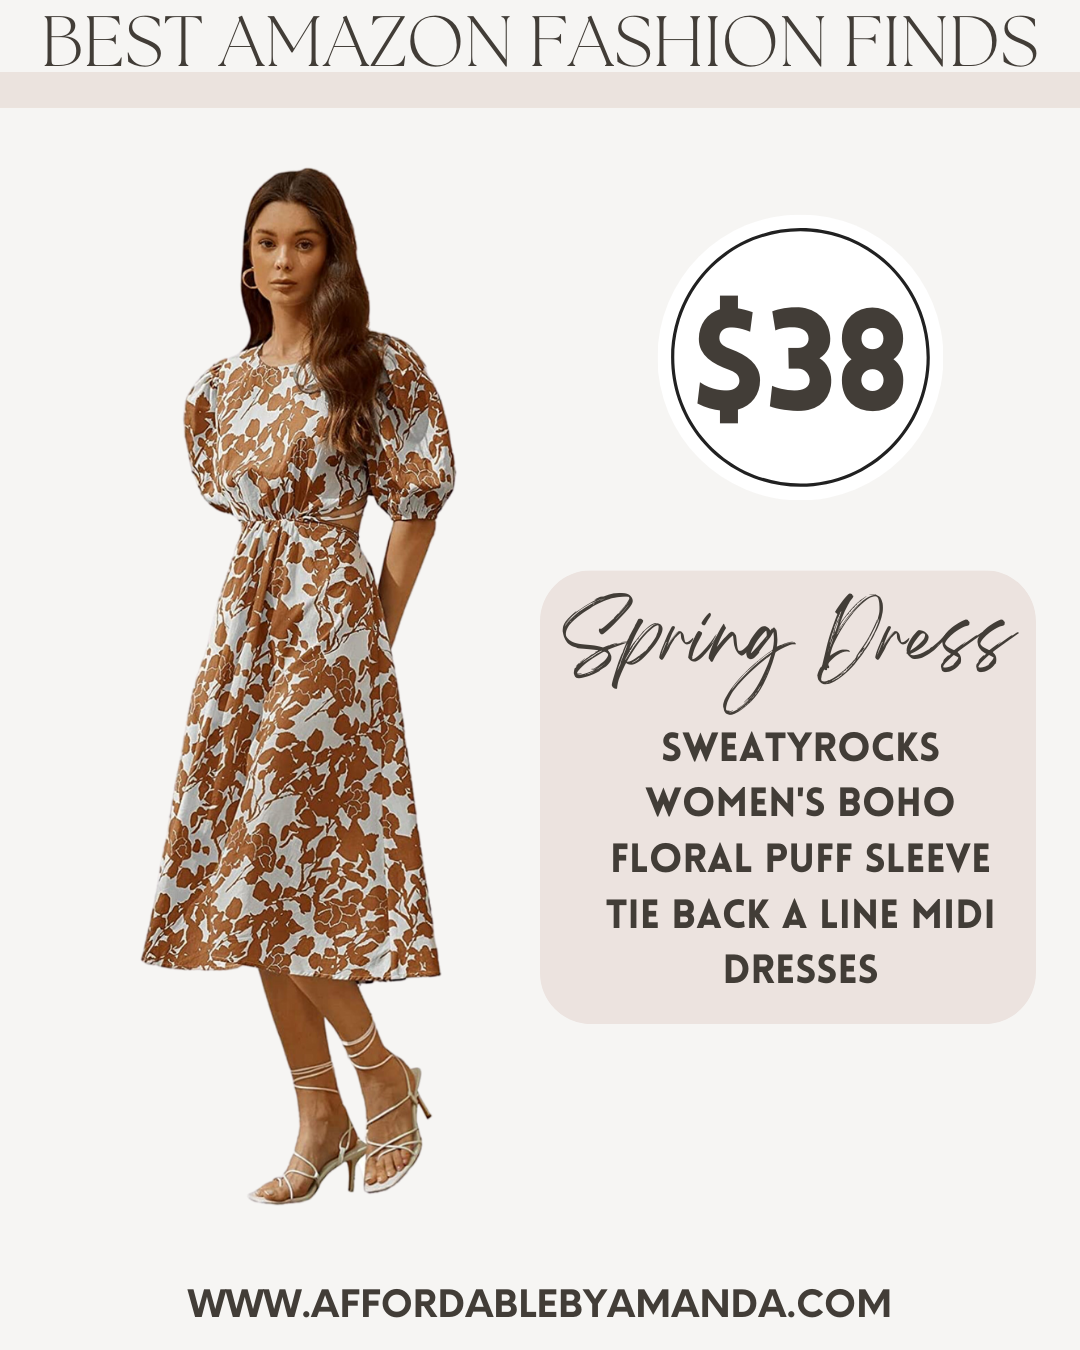 SweatyRocks Women's Boho Floral Puff Sleeve Cut Out Dress Tie Back A Line Midi Dresses 